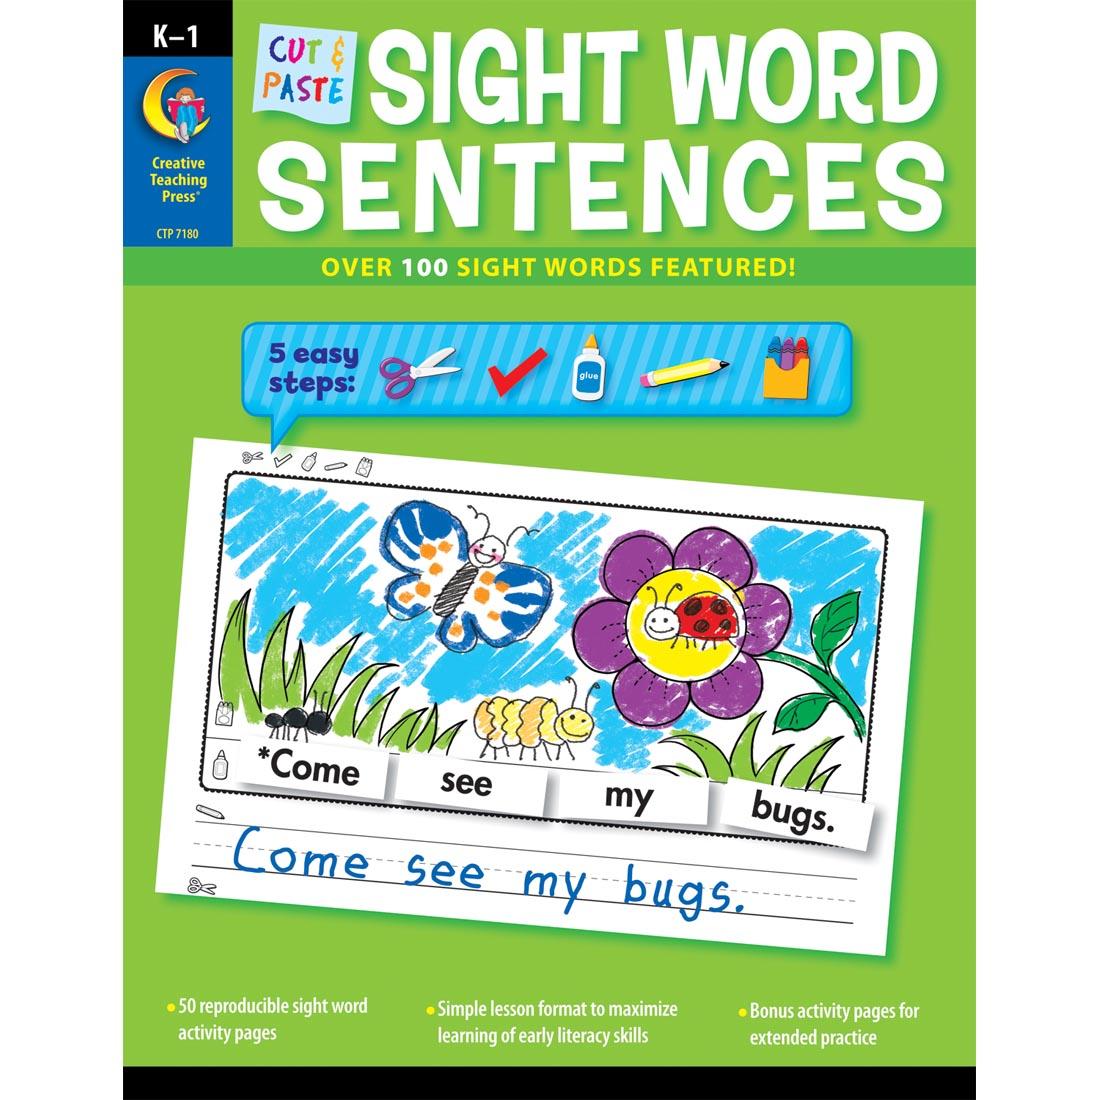 Cut & Paste Sight Word Sentences by Creative Teaching Press